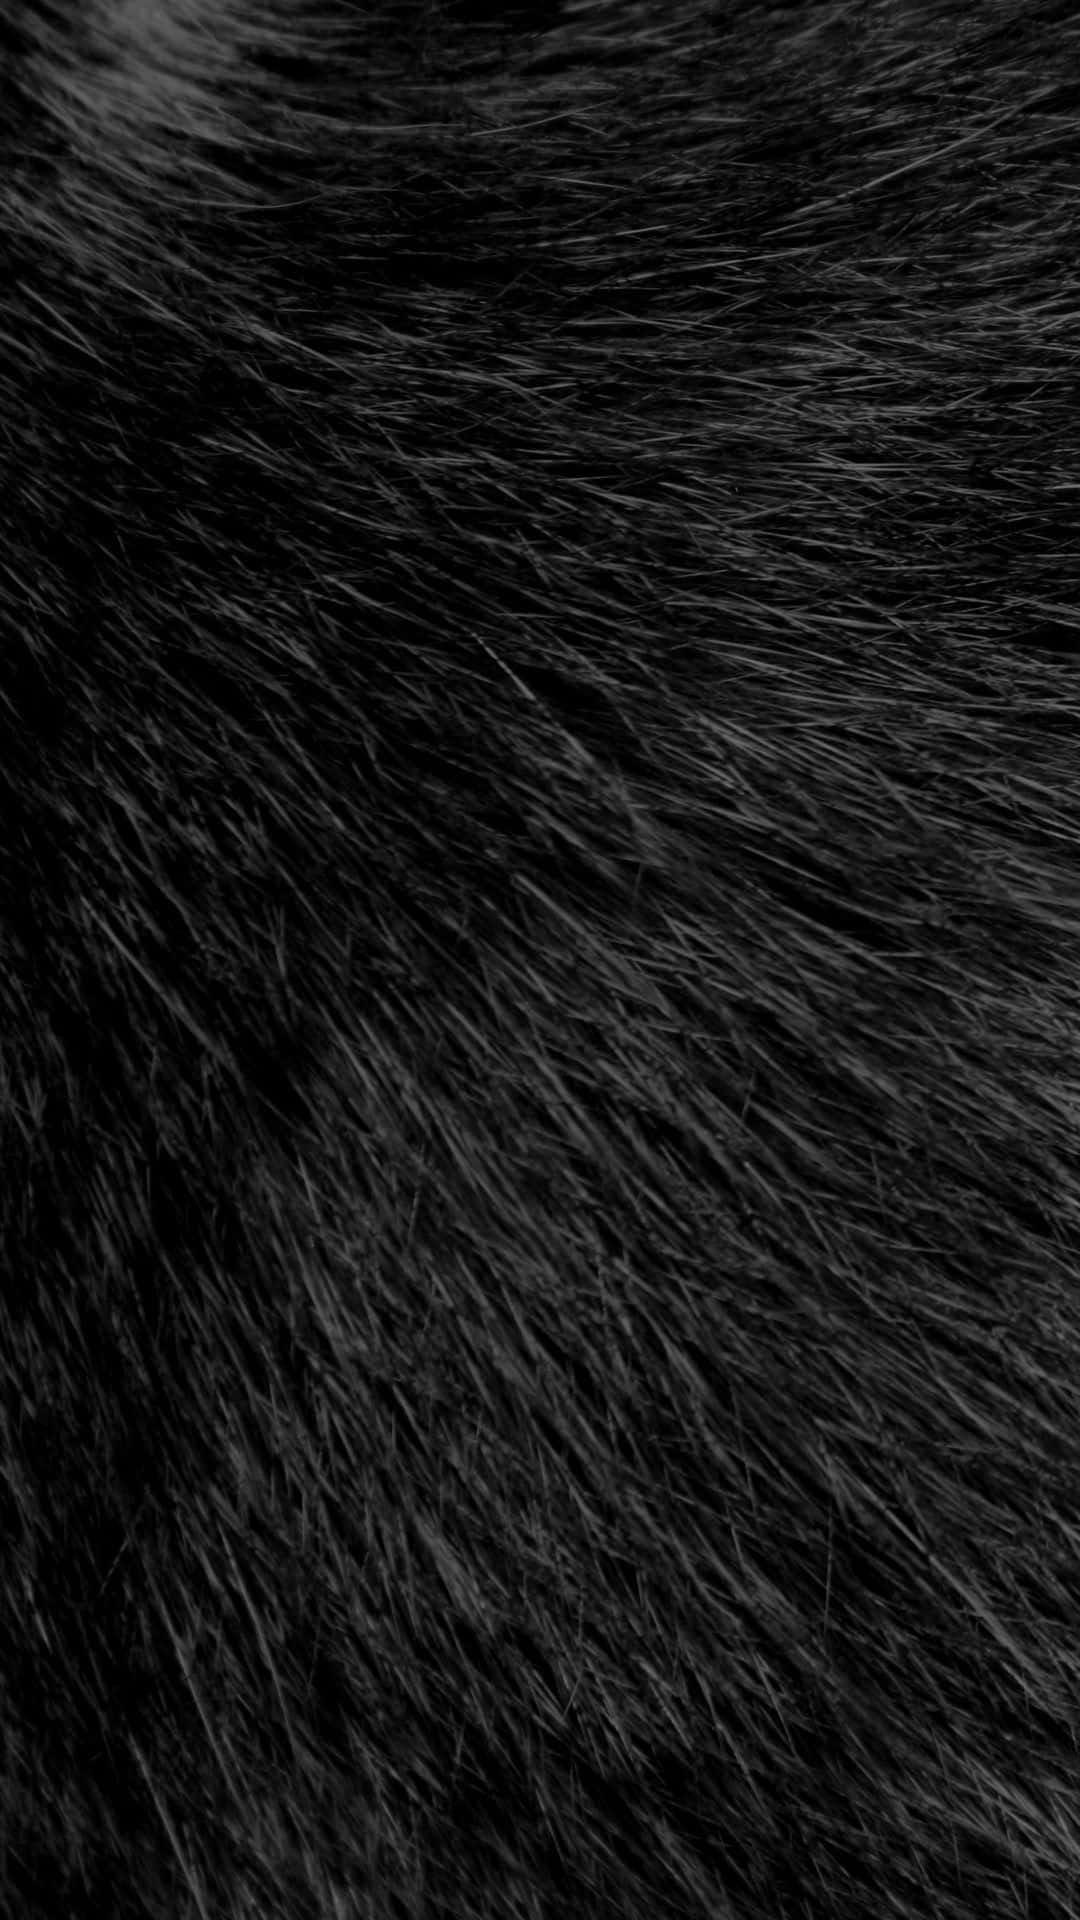 Fuzzy Black Hair Wallpaper